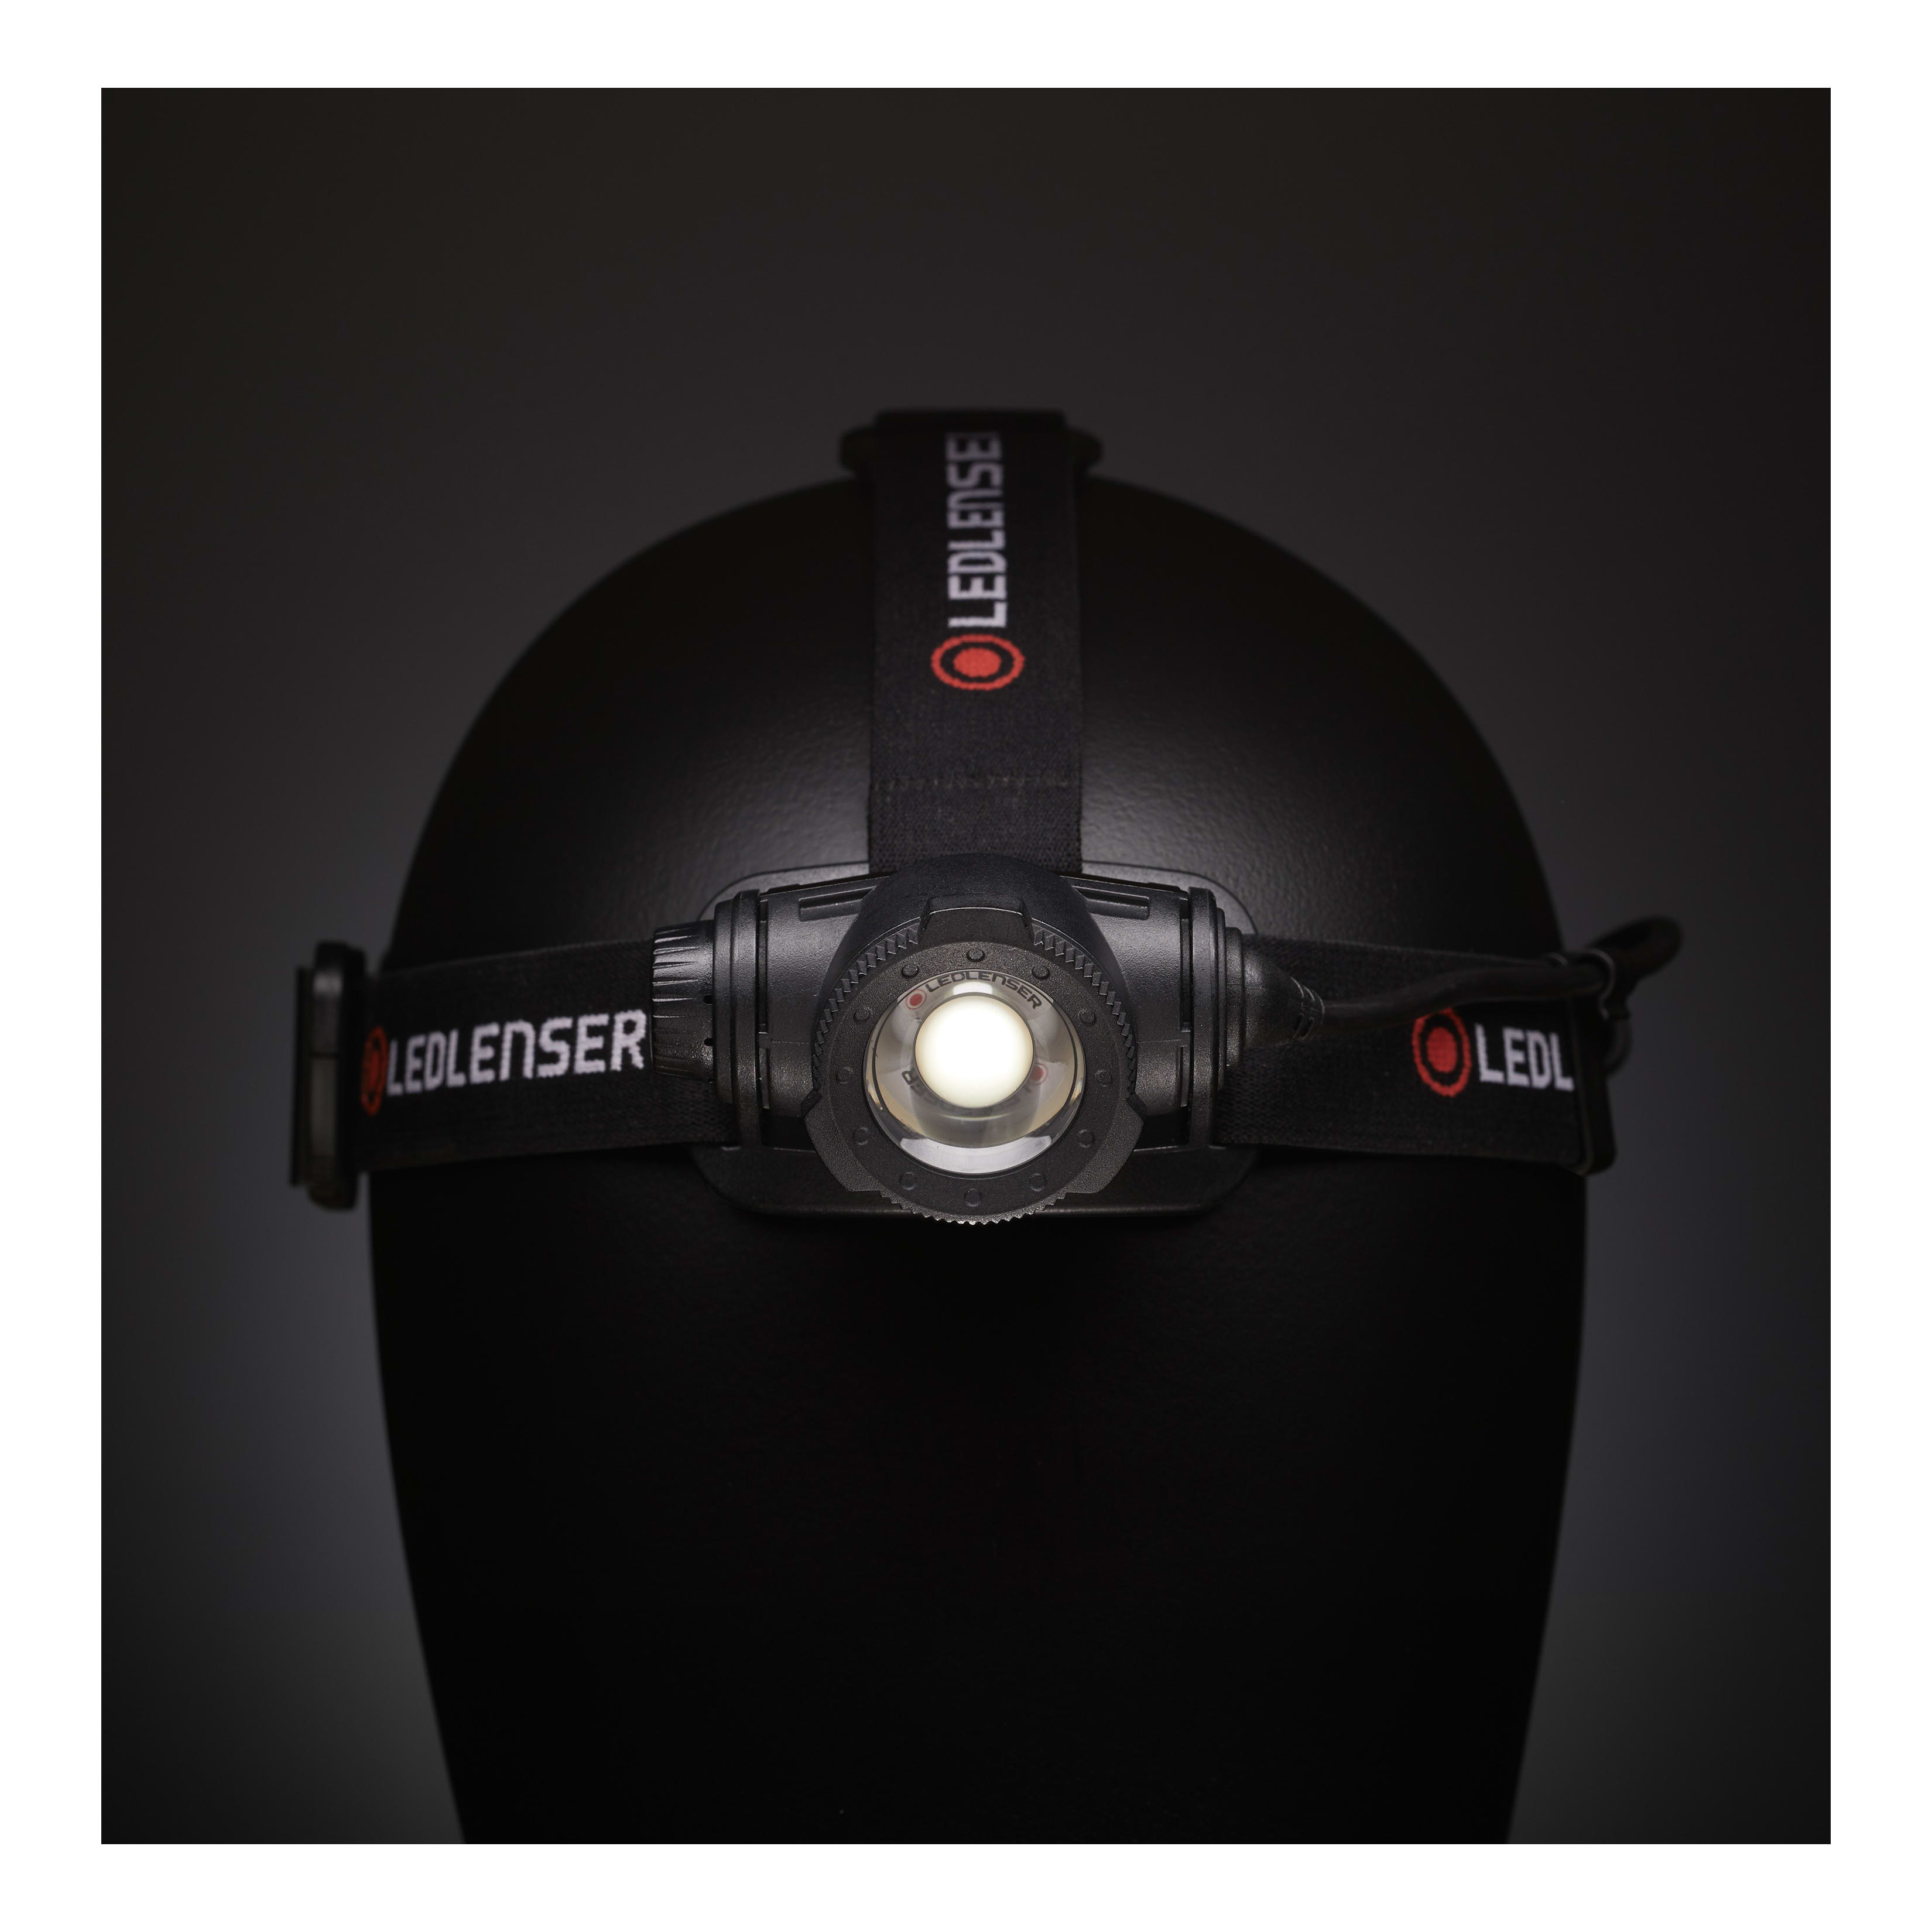 Ledlenser® H7R Core Headlamp